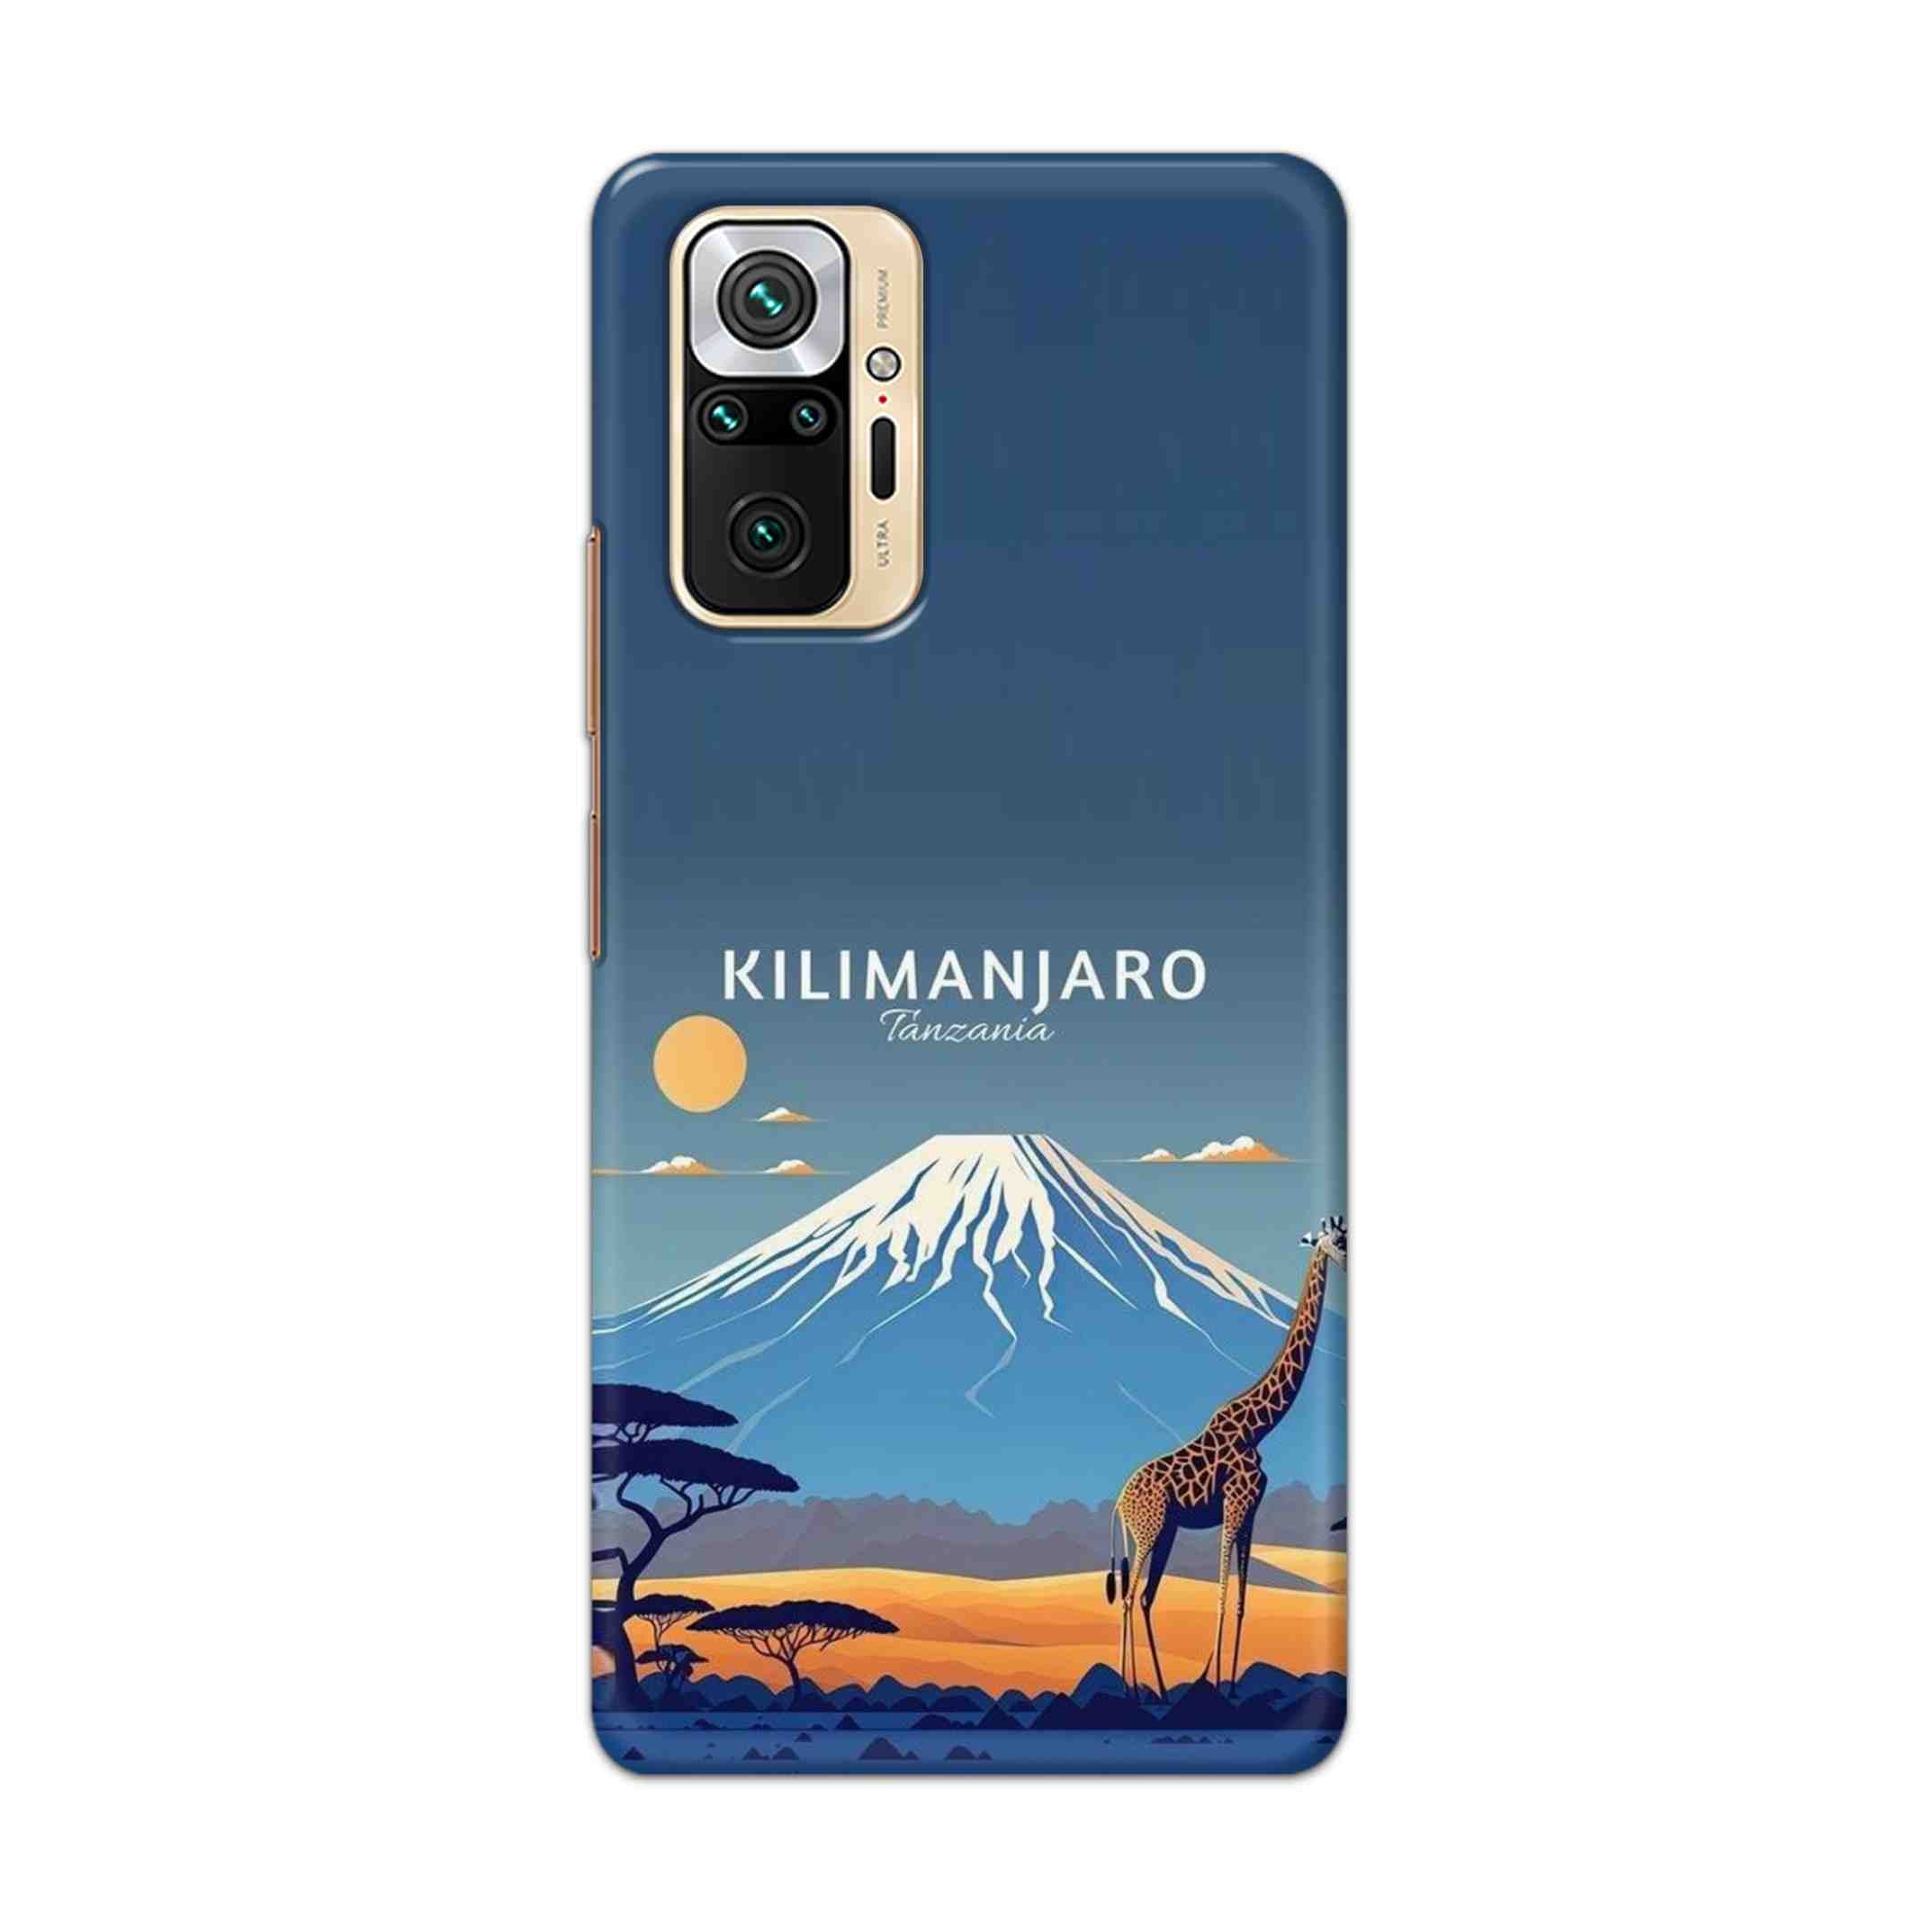 Buy Kilimanjaro Hard Back Mobile Phone Case Cover For Redmi Note 10 Pro Online